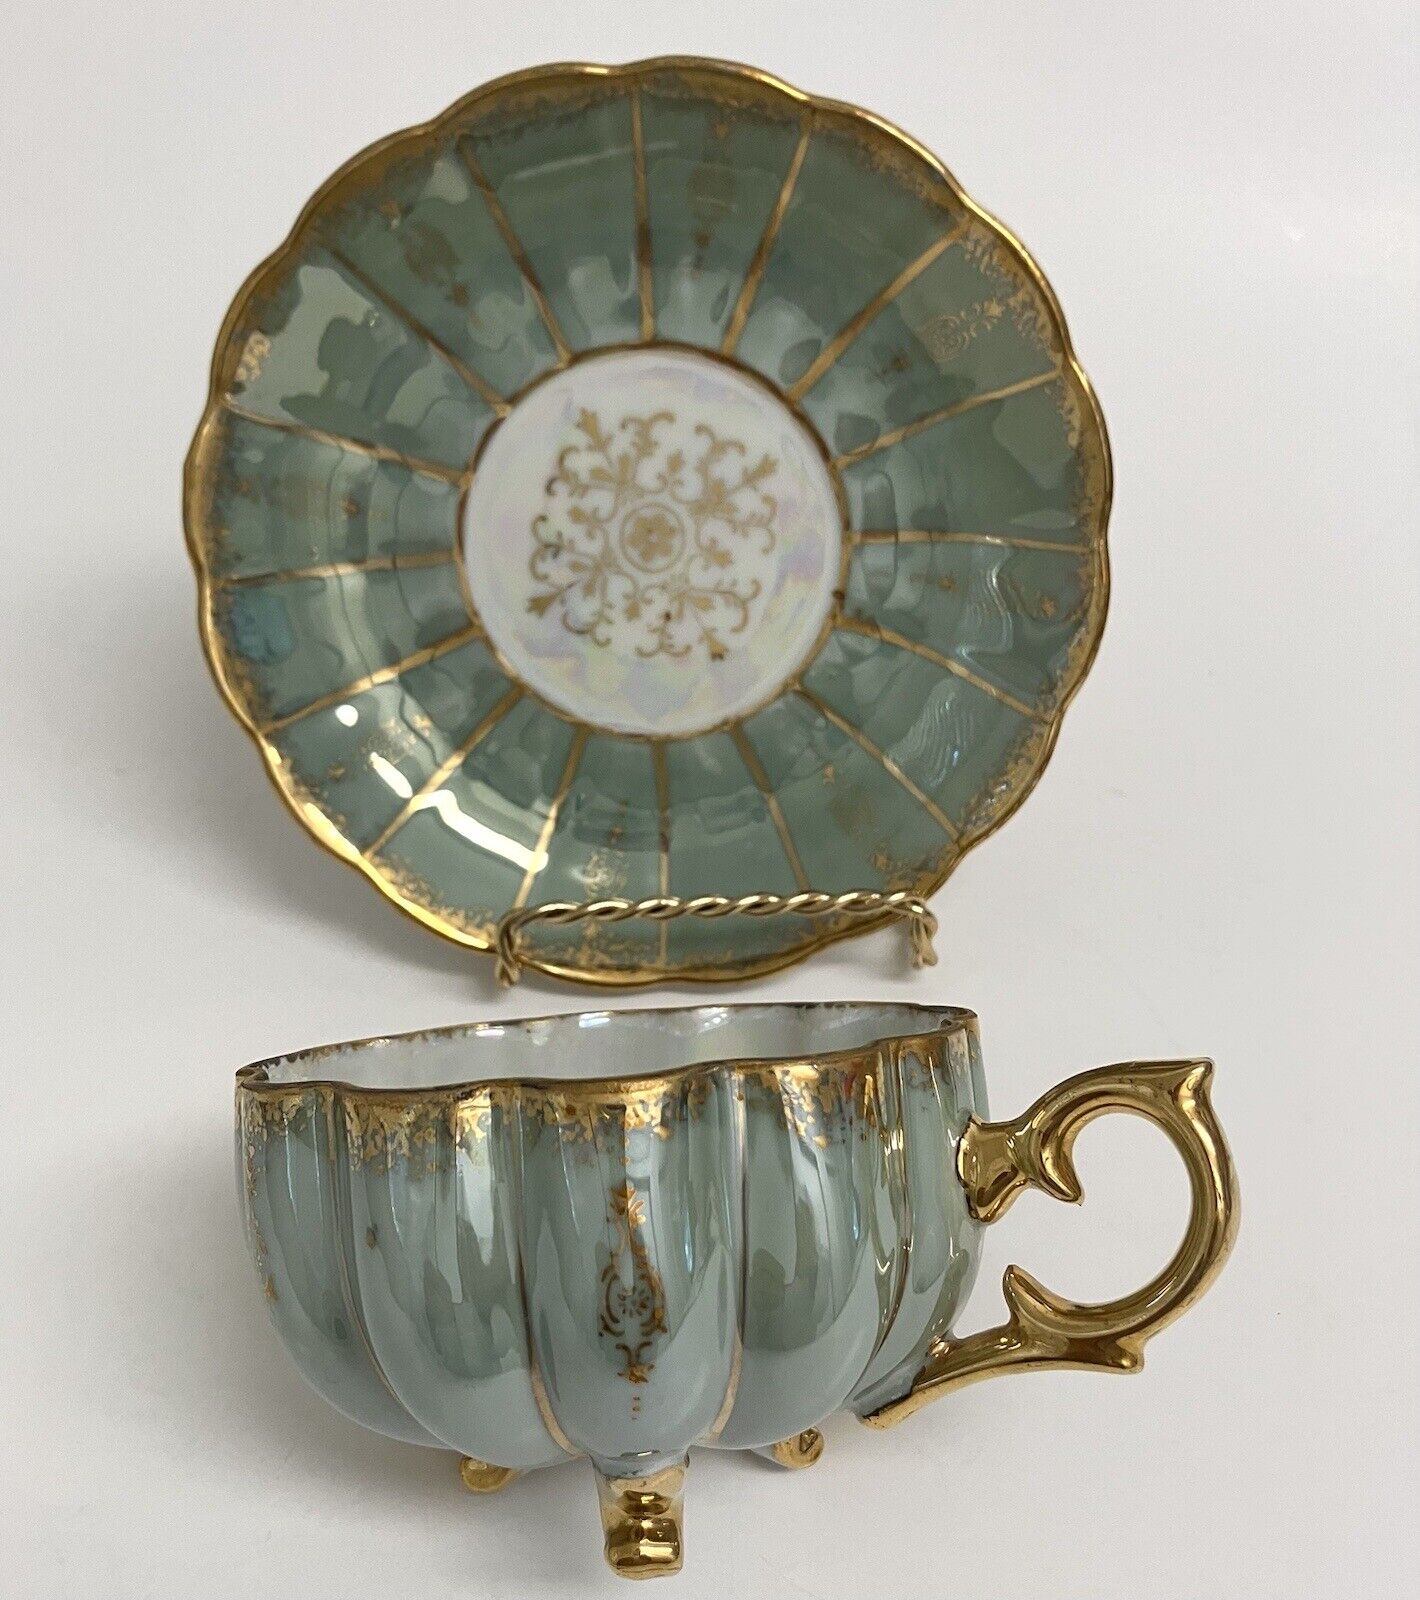 Royal Sealy Tea Cup Set Iridescent Scalloped Design - Green, White, Gold